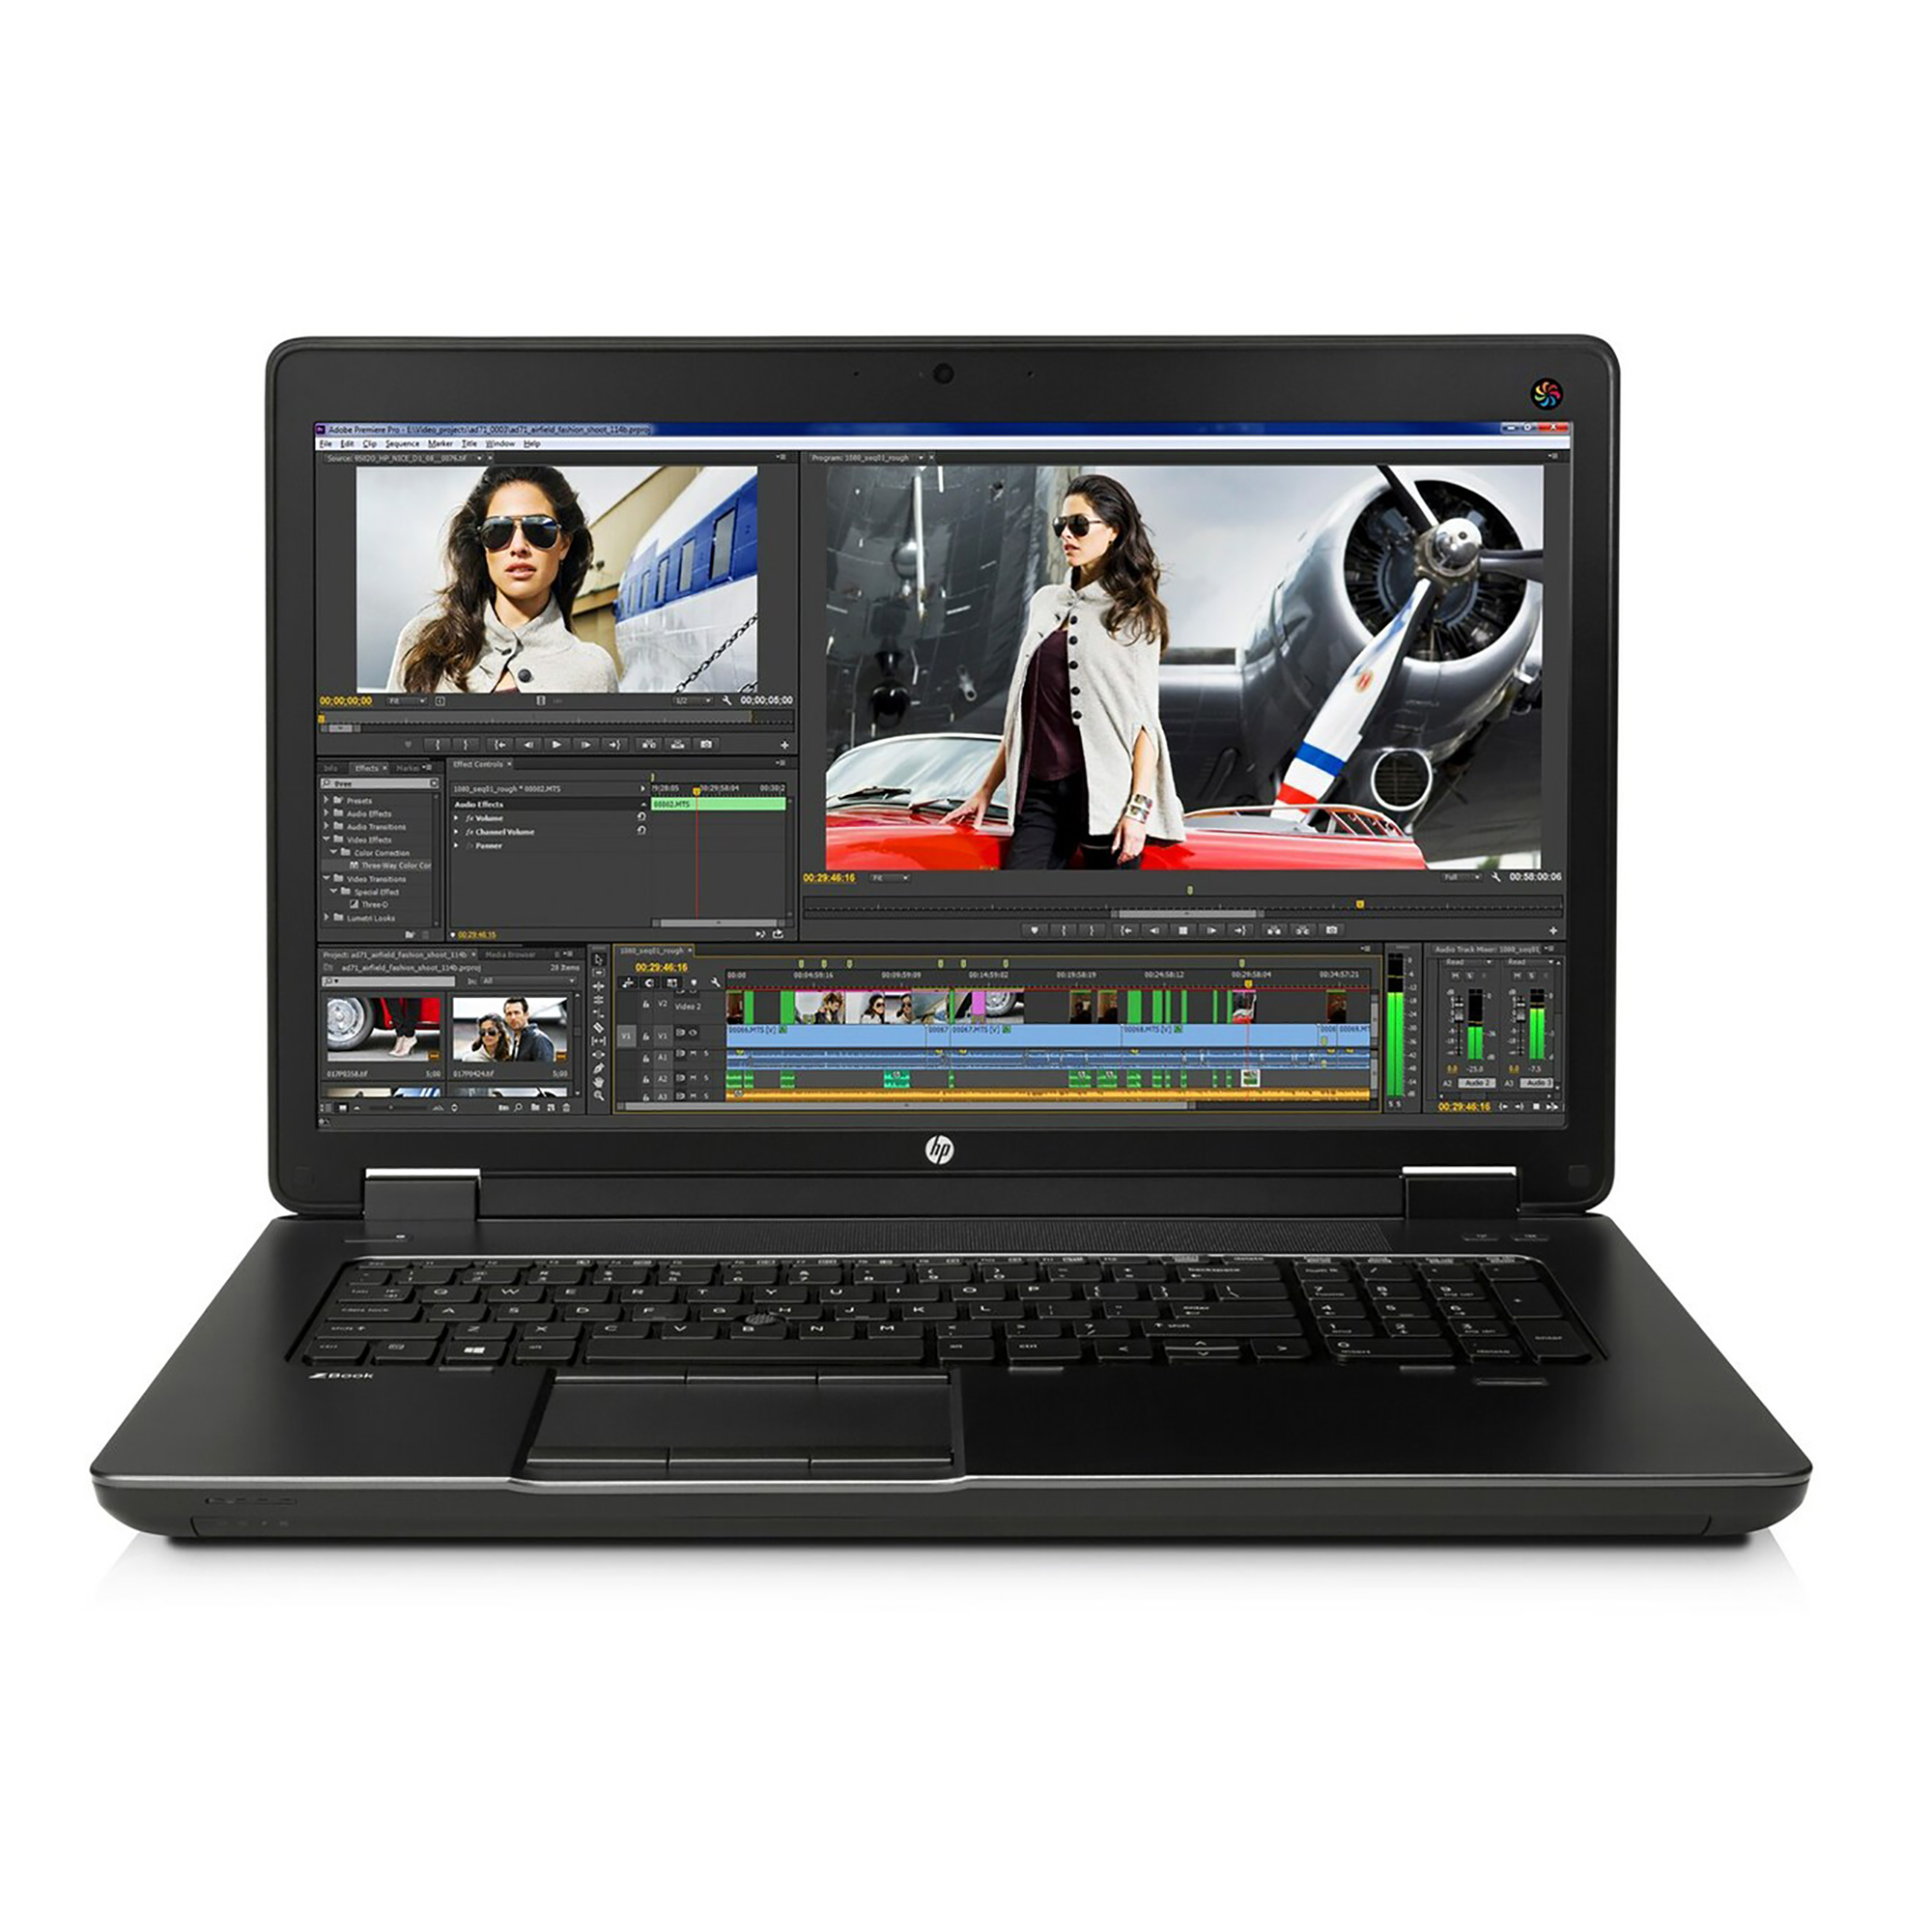 Used - HP ZBook 17 G2, 17.3" FHD Laptop, Intel Core i7-4710MQ @ 2.50 GHz, 16GB DDR4, 250GB HDD, DVD-RW, Bluetooth, Webcam, Win10 Home 64 - image 1 of 4